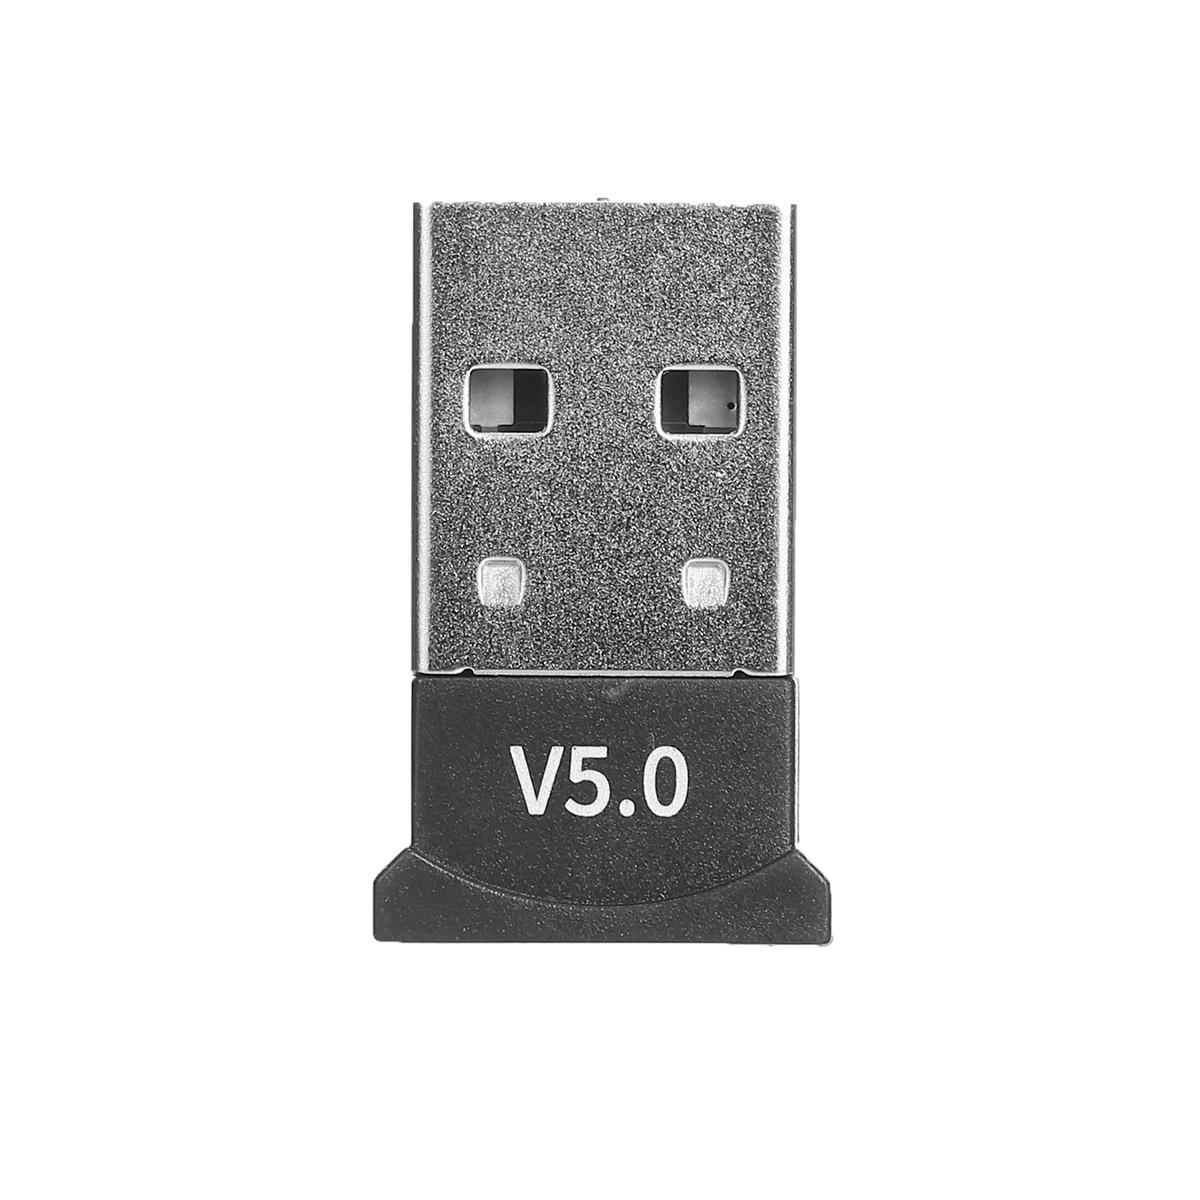 Bluetooth 5.0 USB-adapter voor Windows 7/8/10 voor Vista XP voor Mac OS X PC-toetsenbord Muis Gamepa